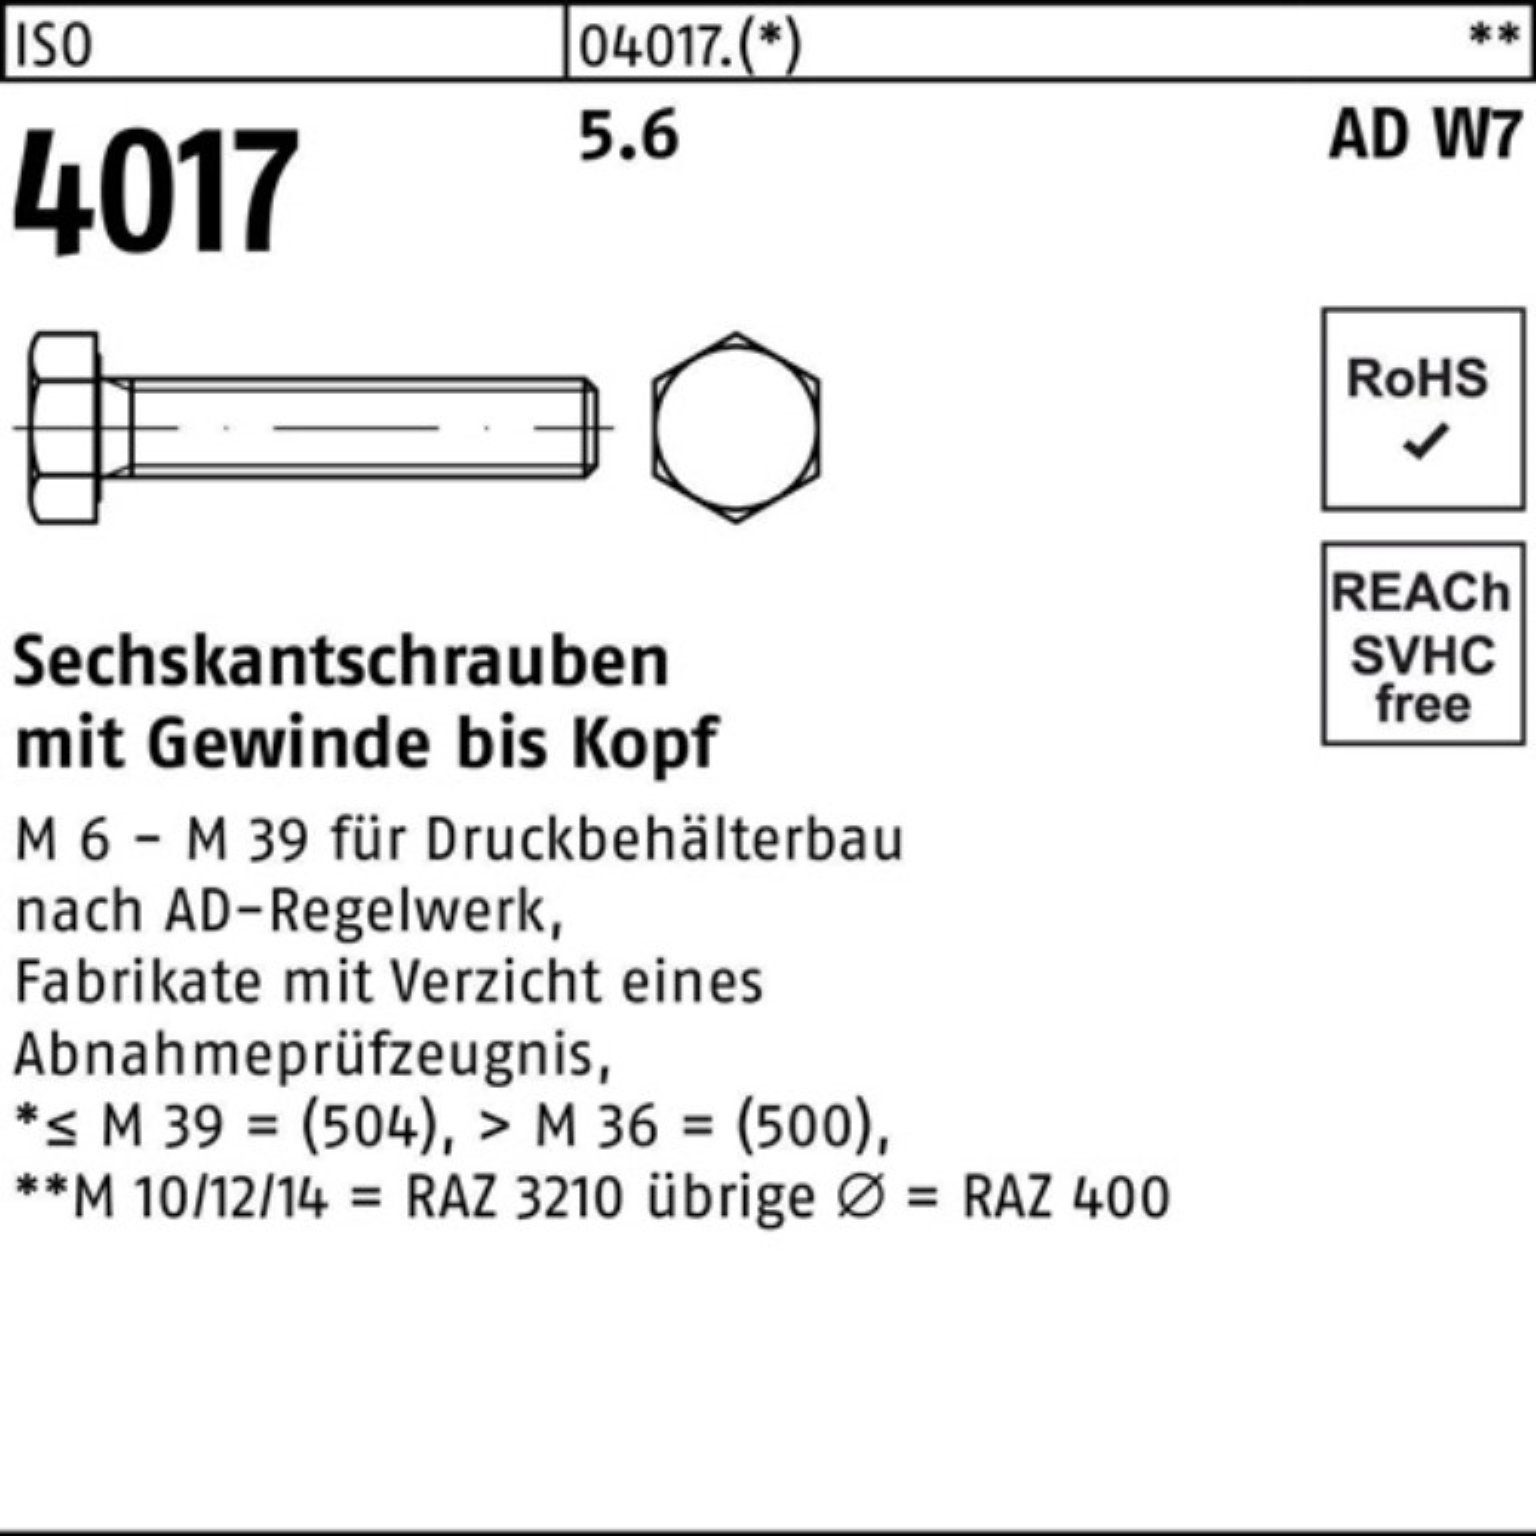 Bufab Sechskantschraube 100er Pack Sechskantschraube ISO 4017 VG M12x 110 5.6 AD W7 50 Stück | Schrauben